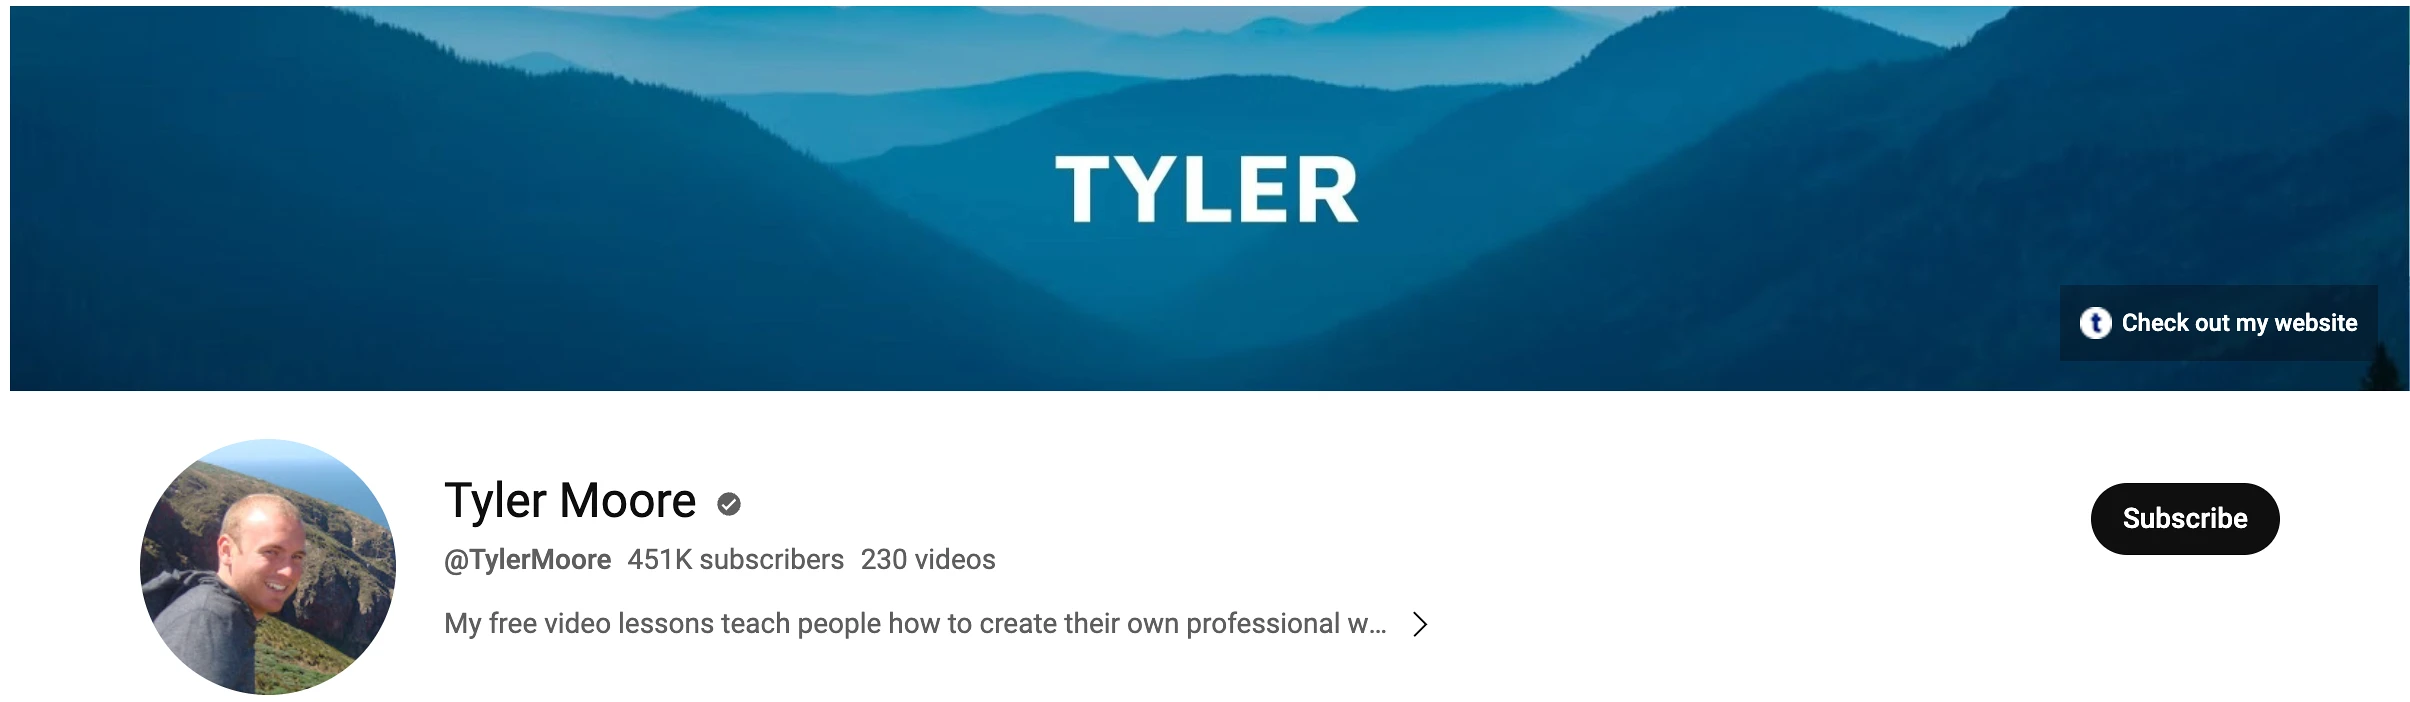 Tyler-Moore - Best Youtube Channels for Learning WordPress